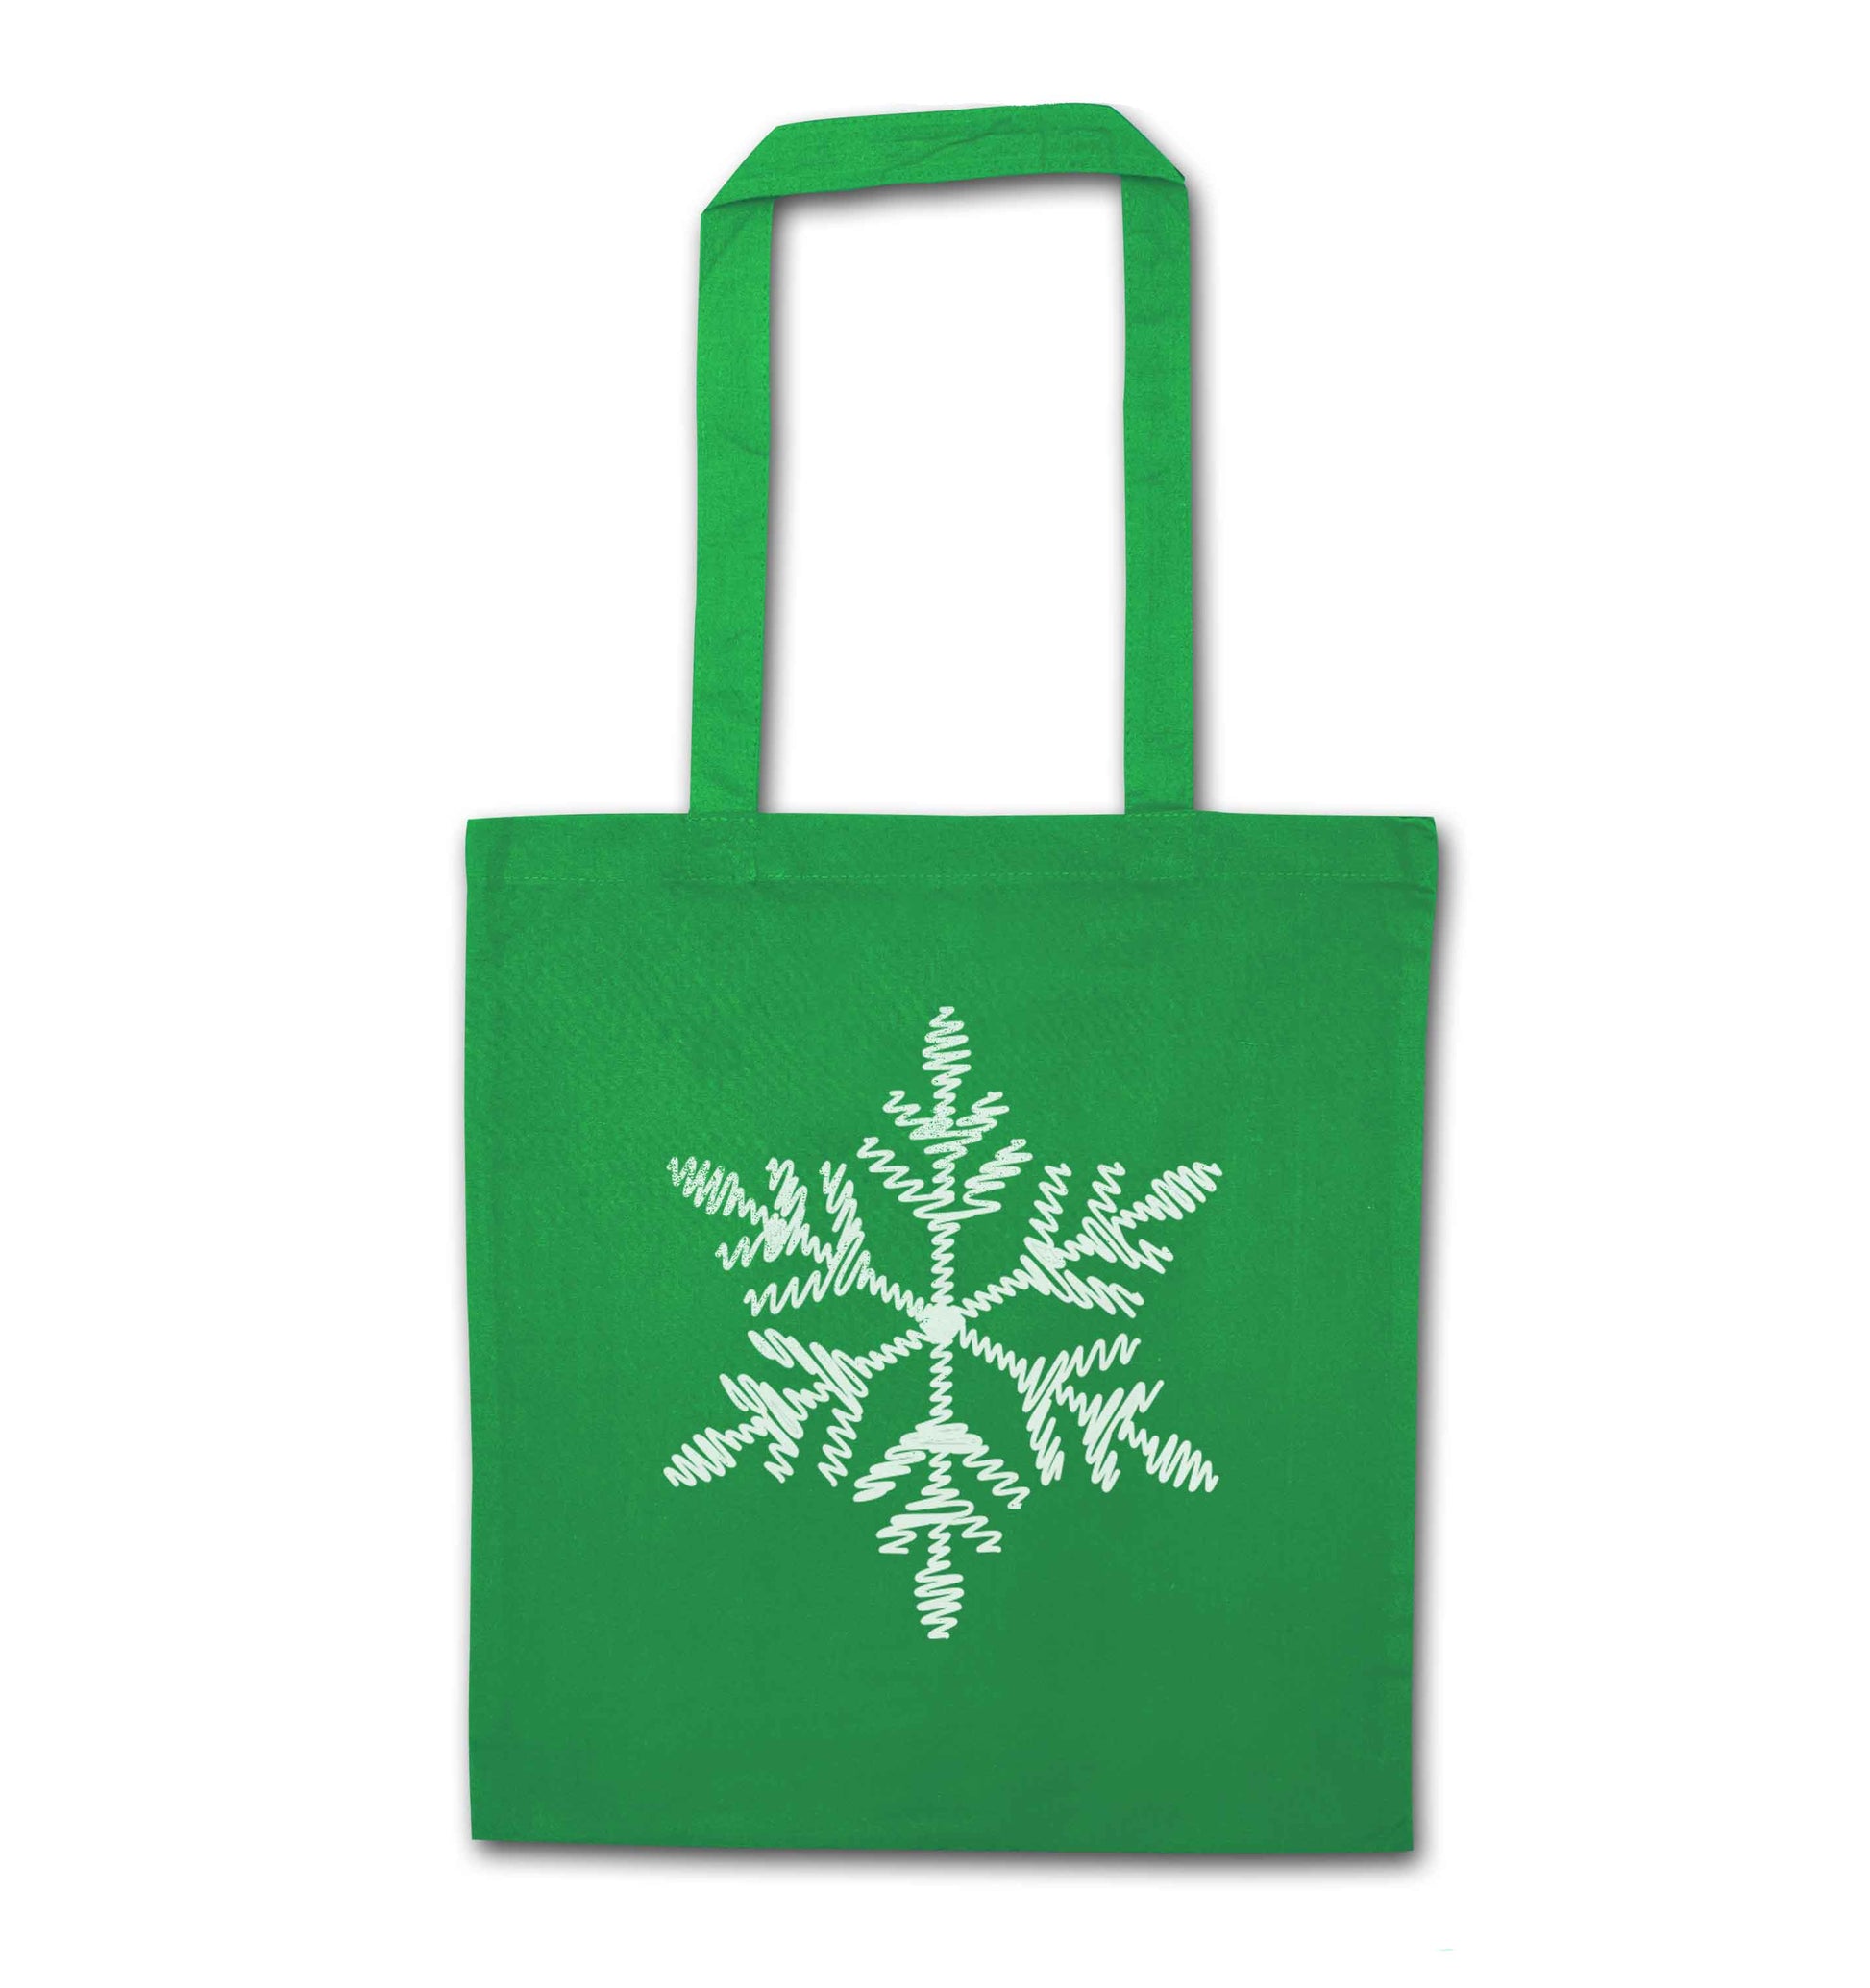 Snowflake green tote bag